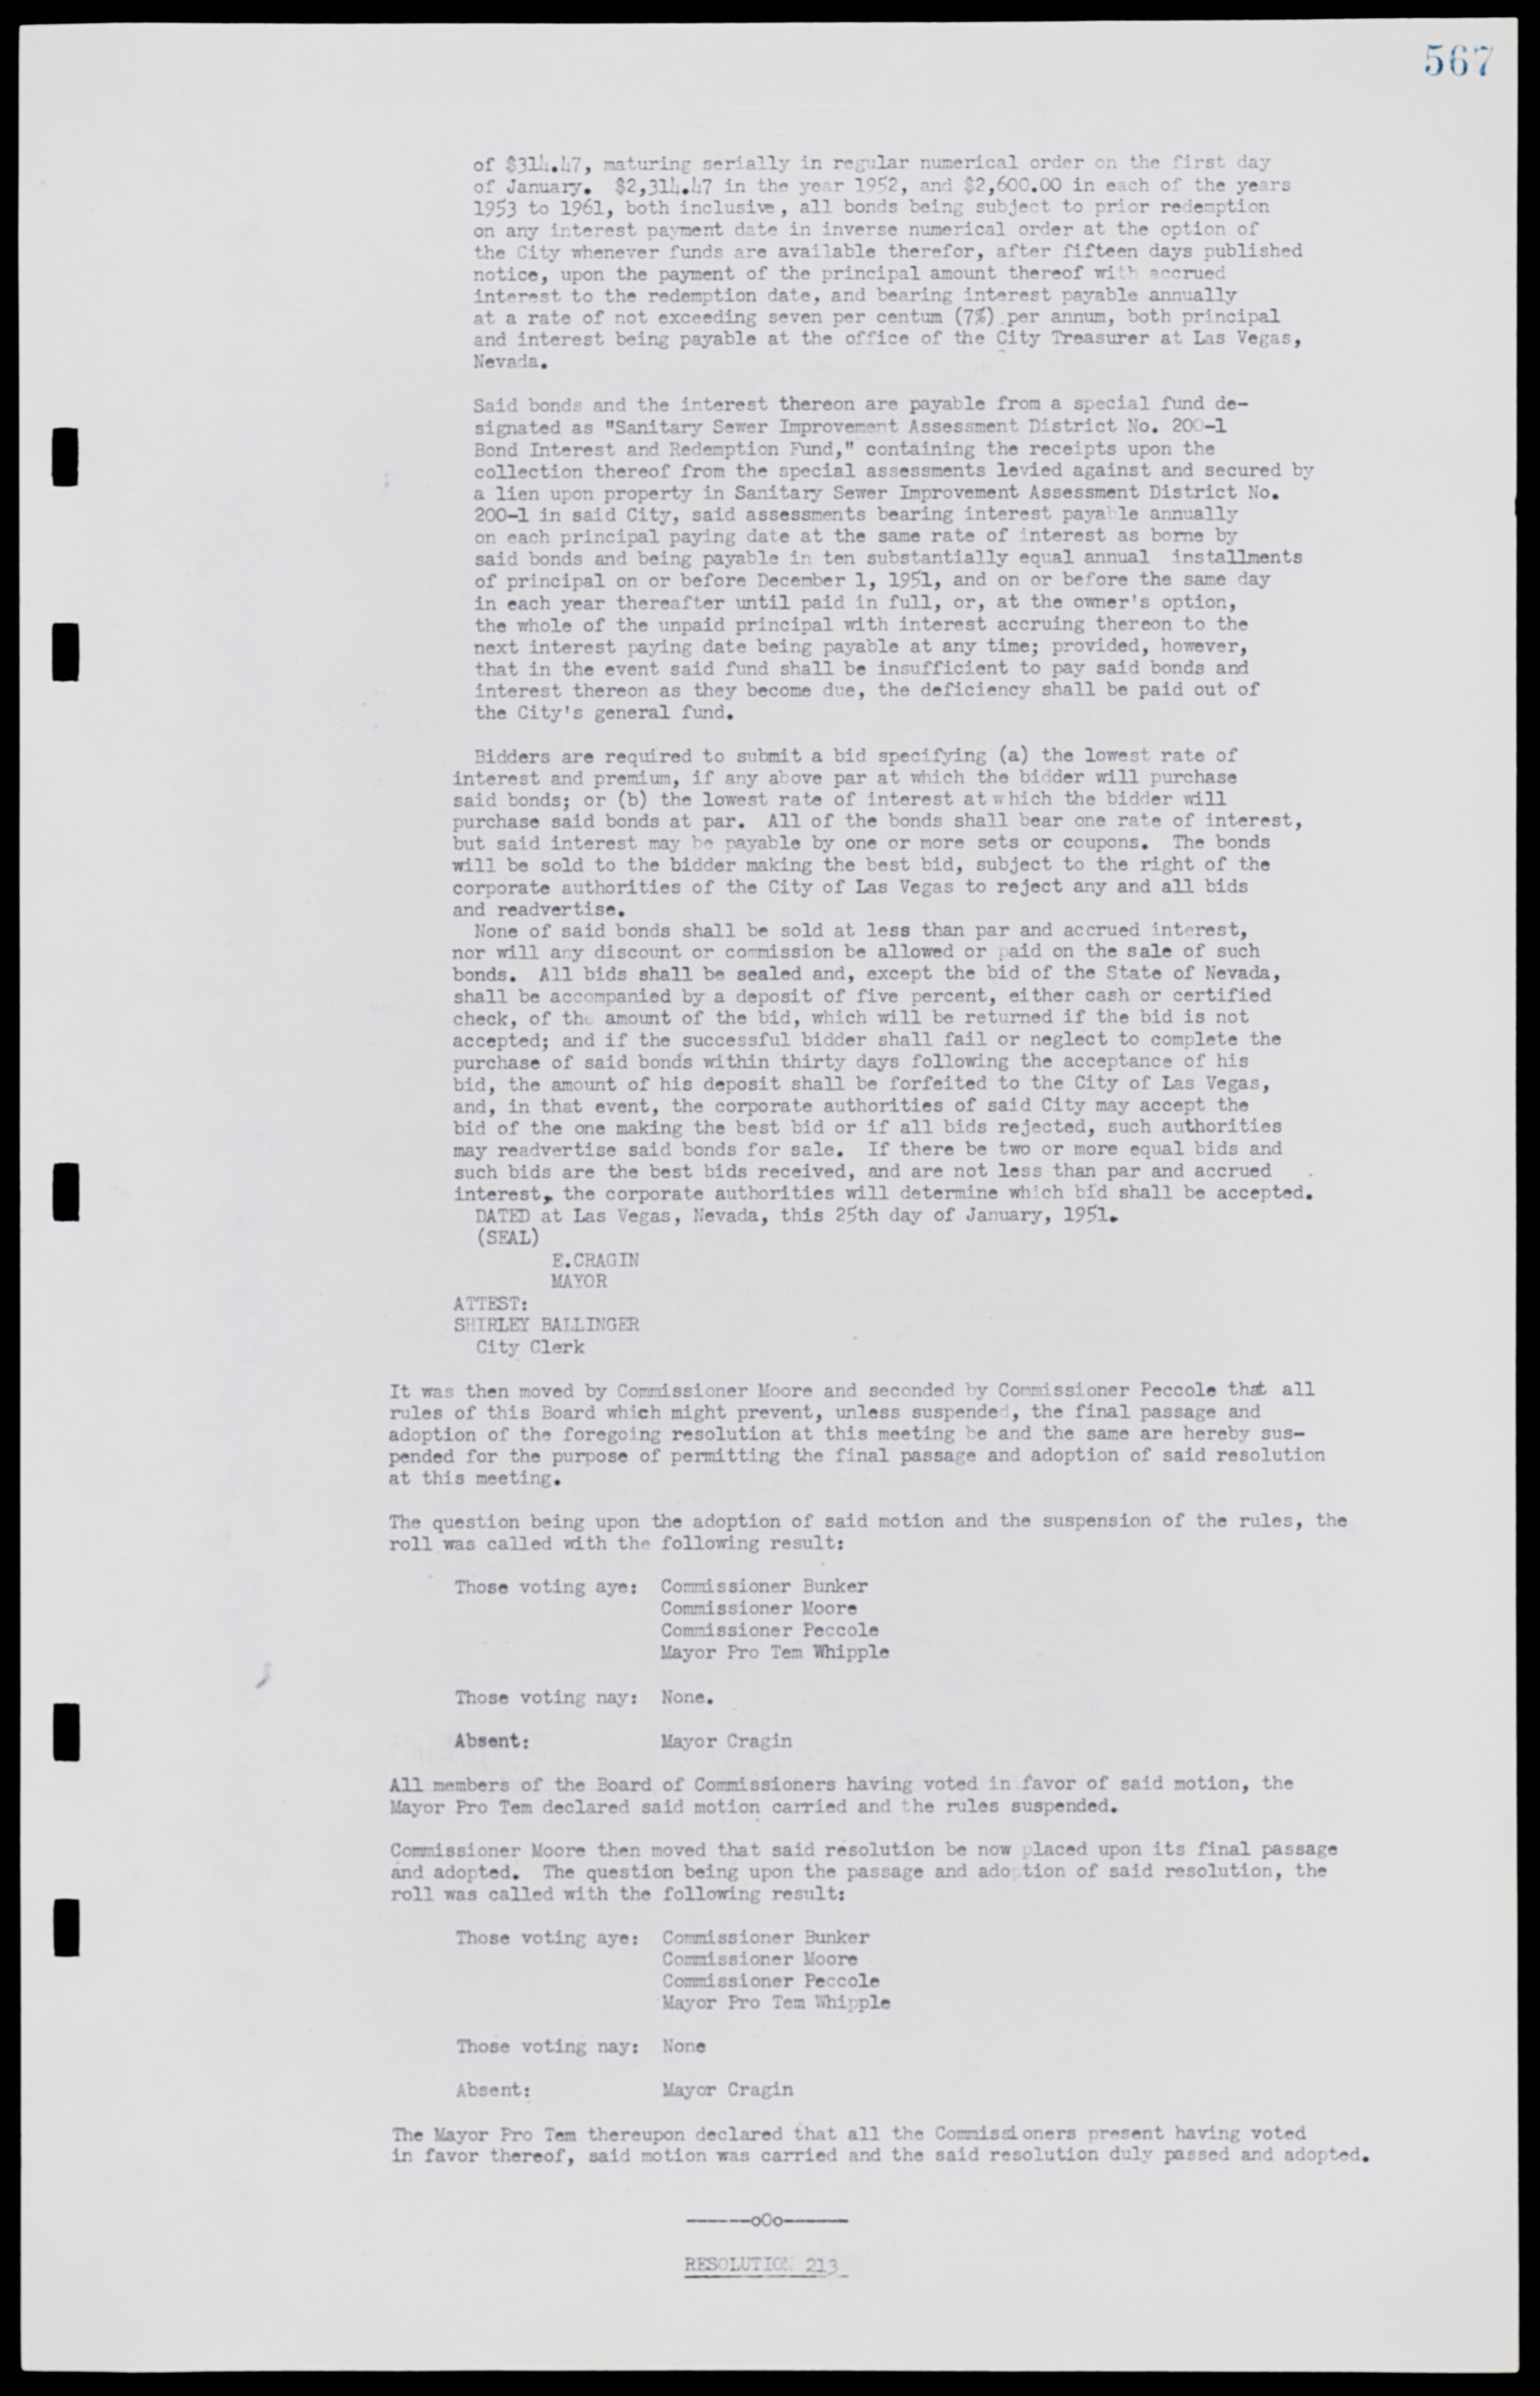 Las Vegas City Commission Minutes, January 7, 1947 to October 26, 1949, lvc000006-598